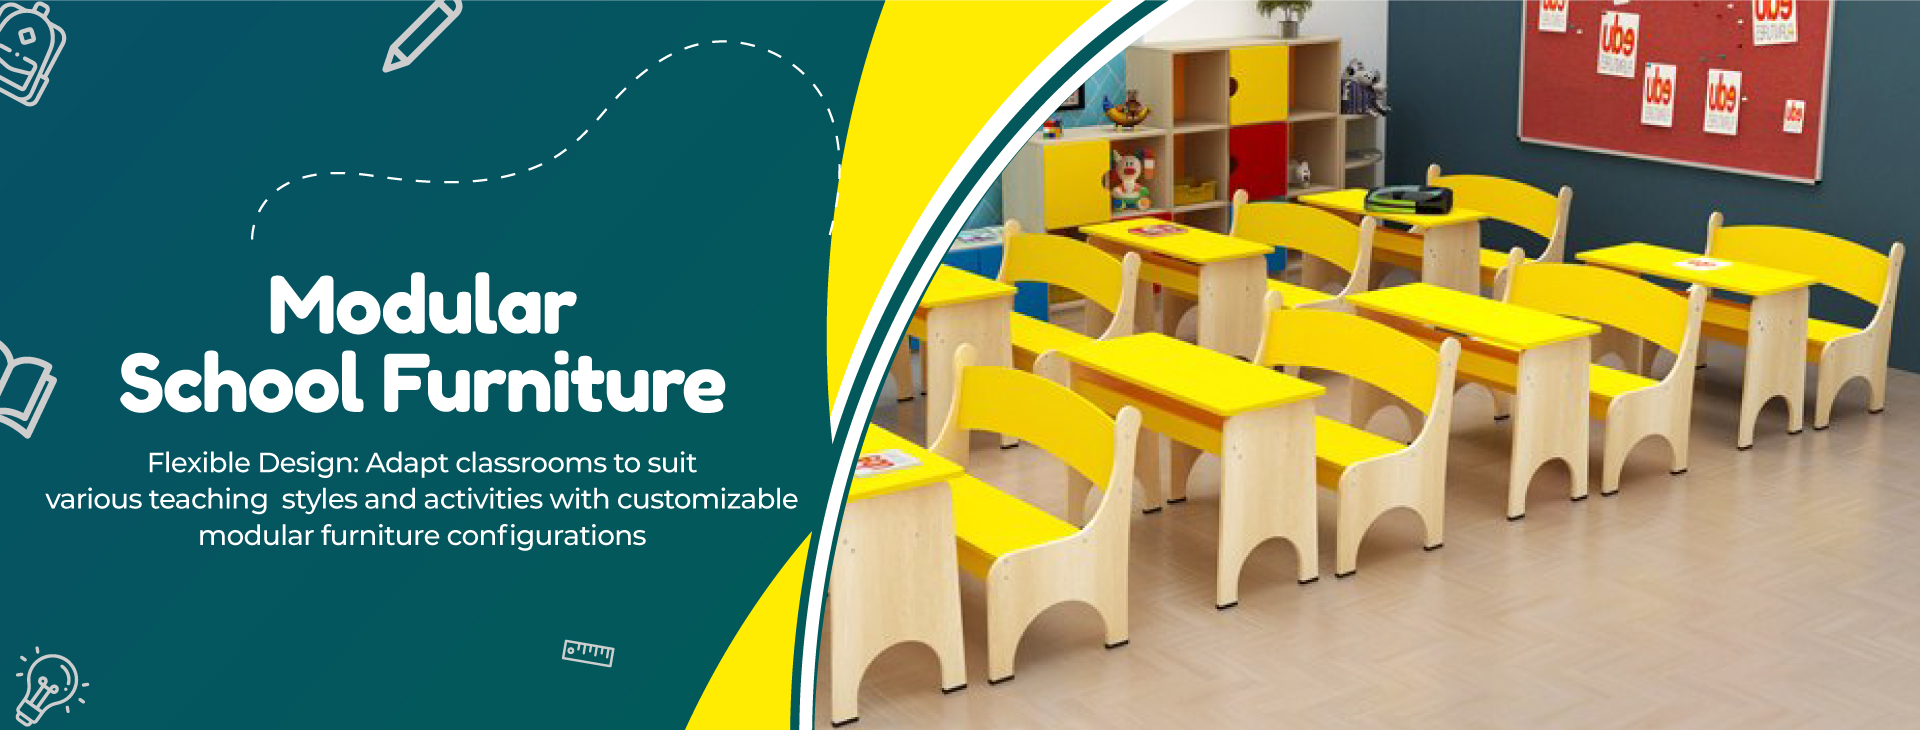 Modular School Furniture Manufacturers in Ghana